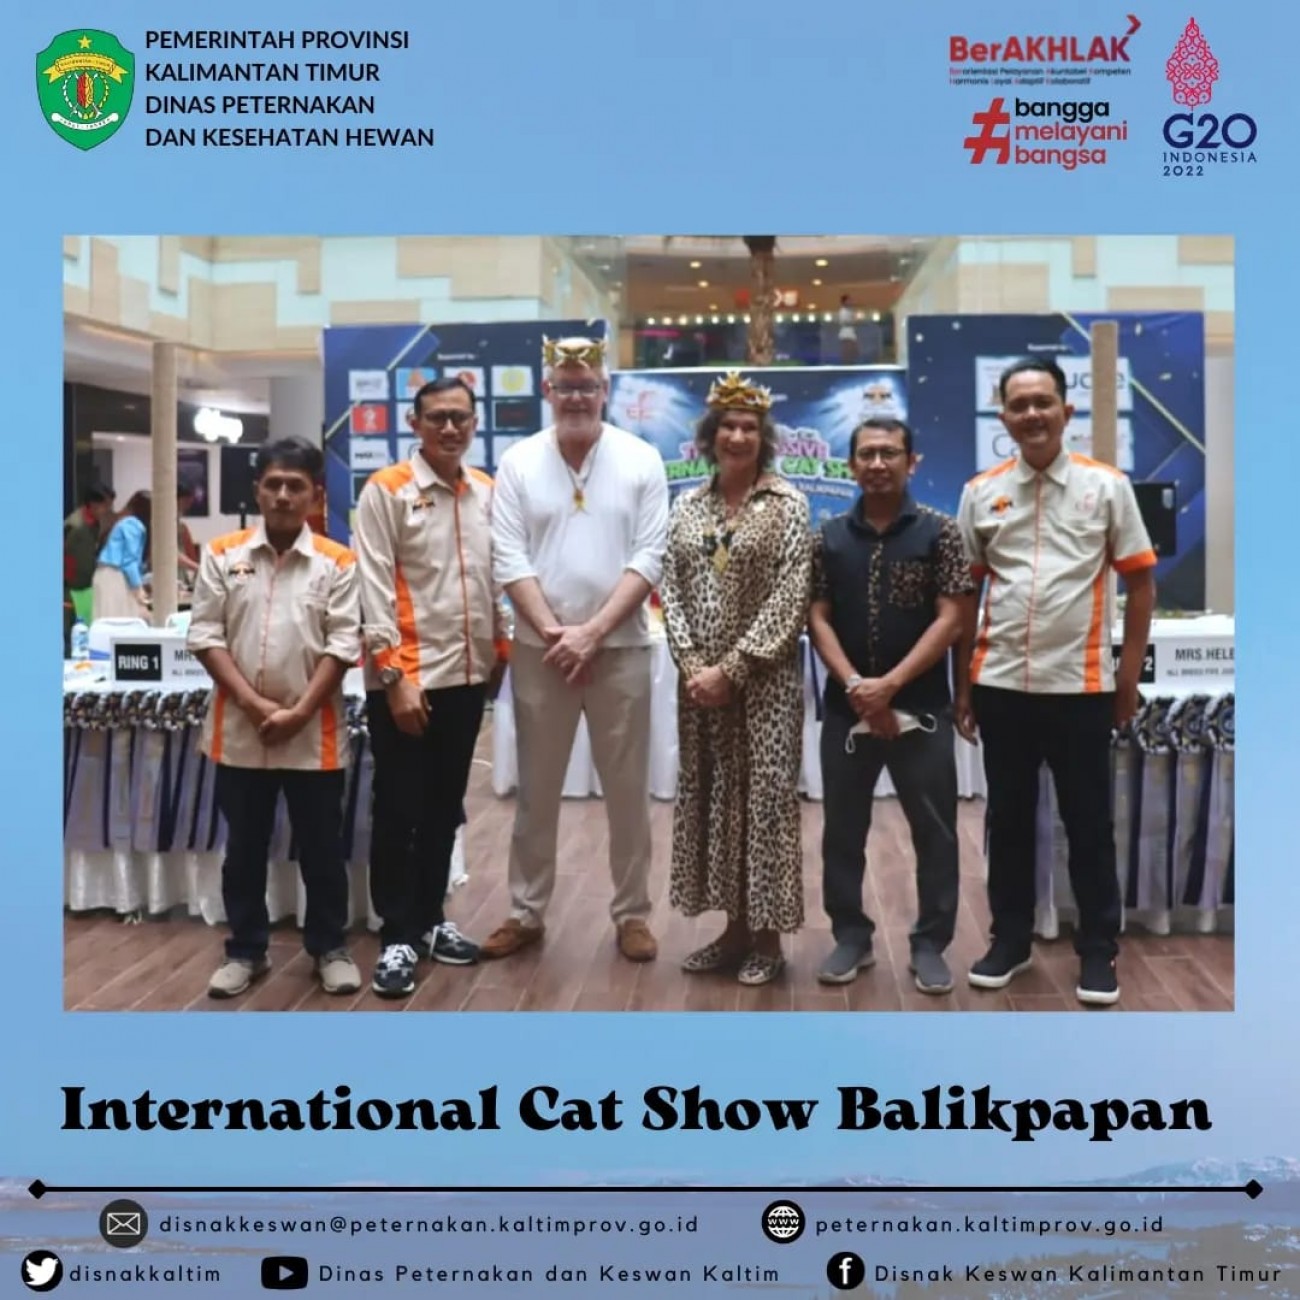 International Cat Show Balikpapan